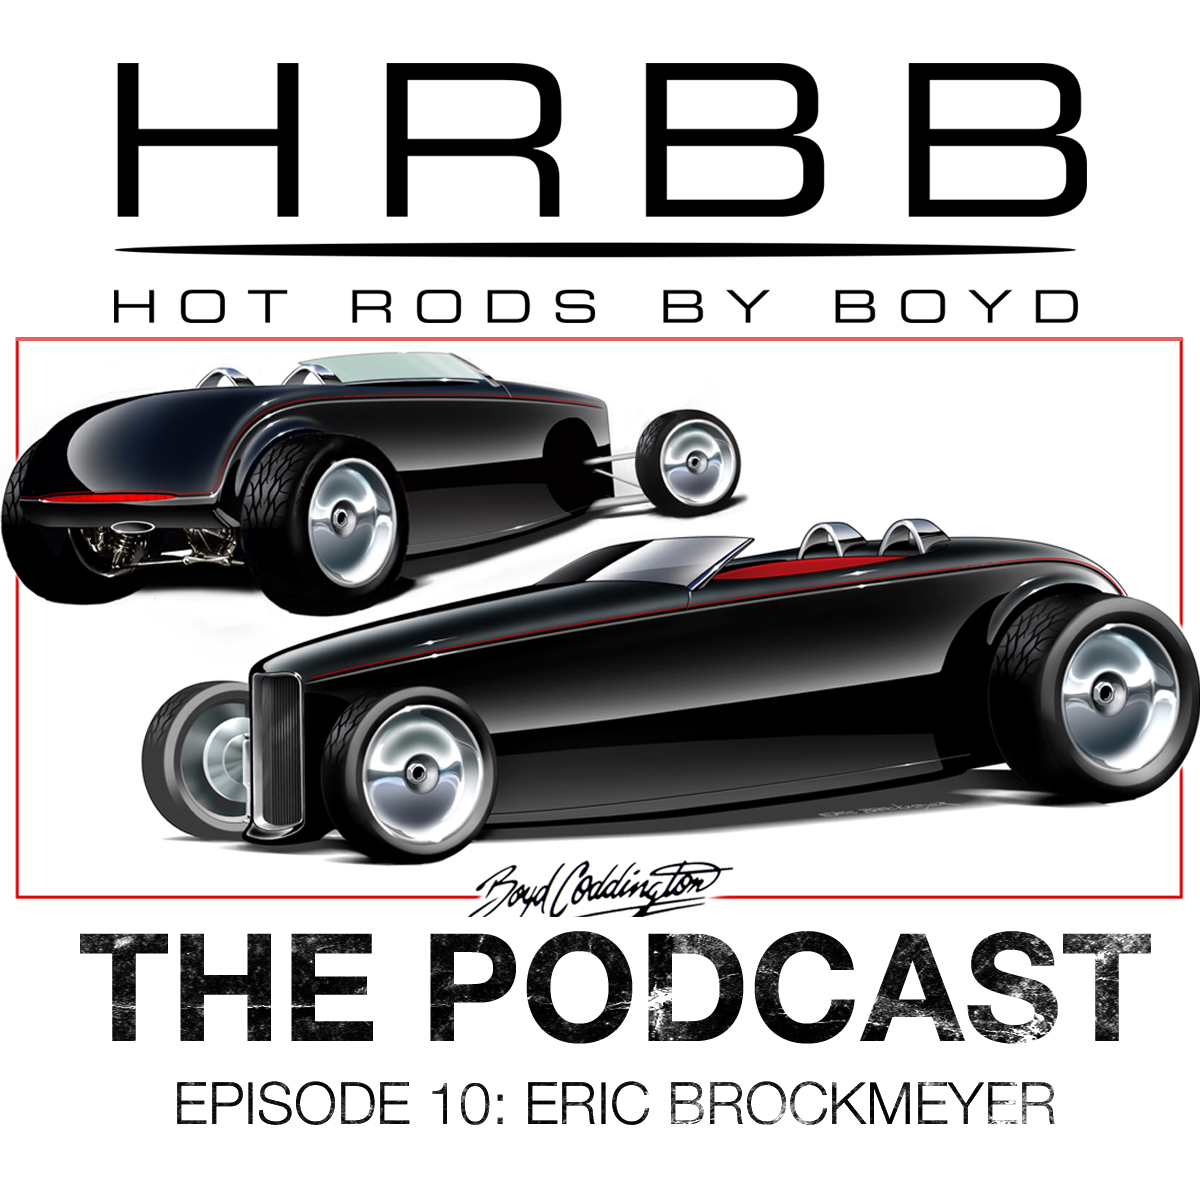 HRBB Podcast Ep10 - Eric Brockmeyer